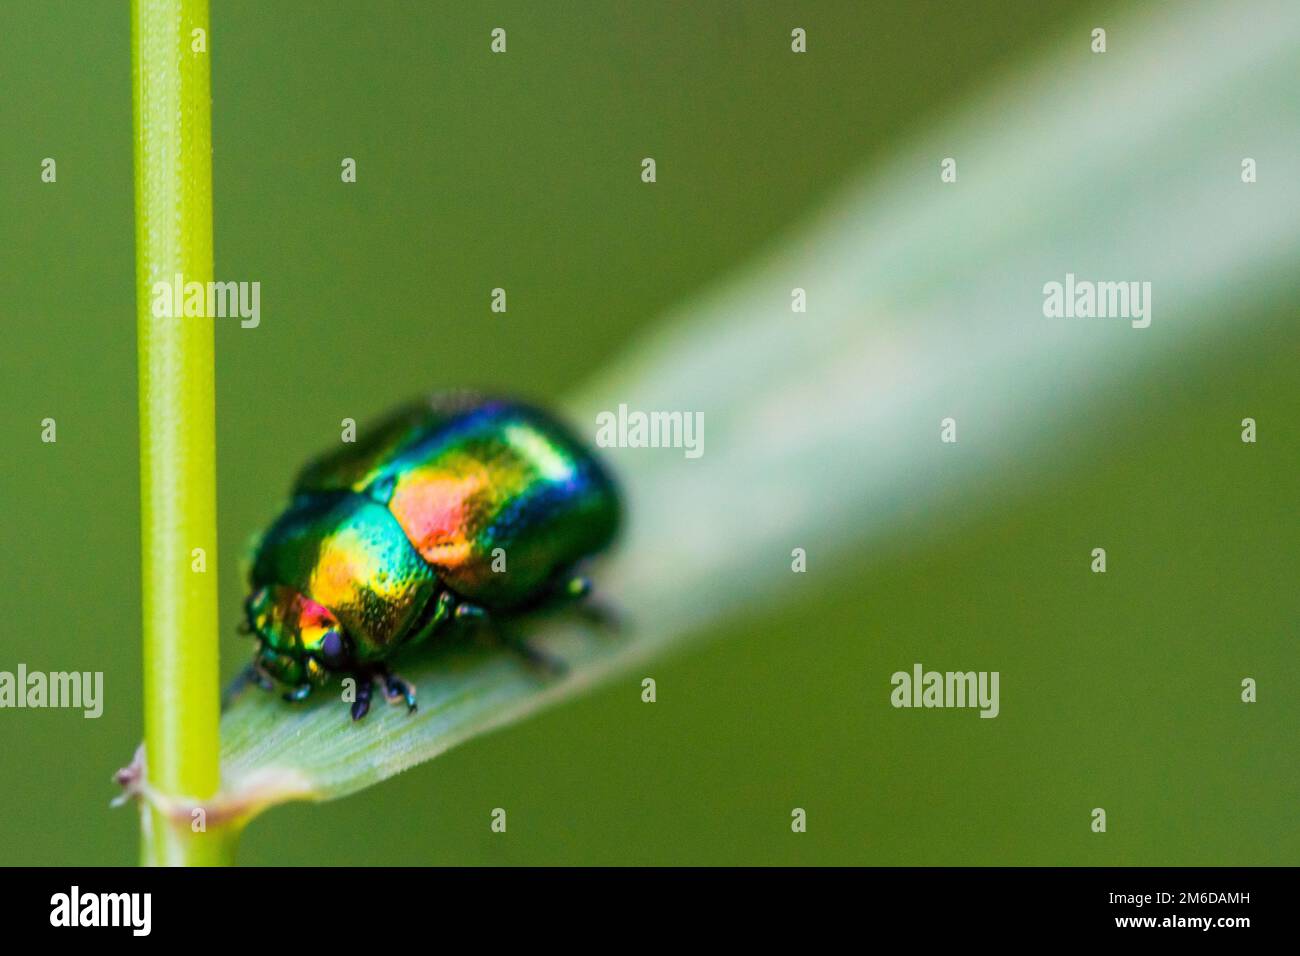 Beautiful colorful shiny beetle on leaf Stock Photo